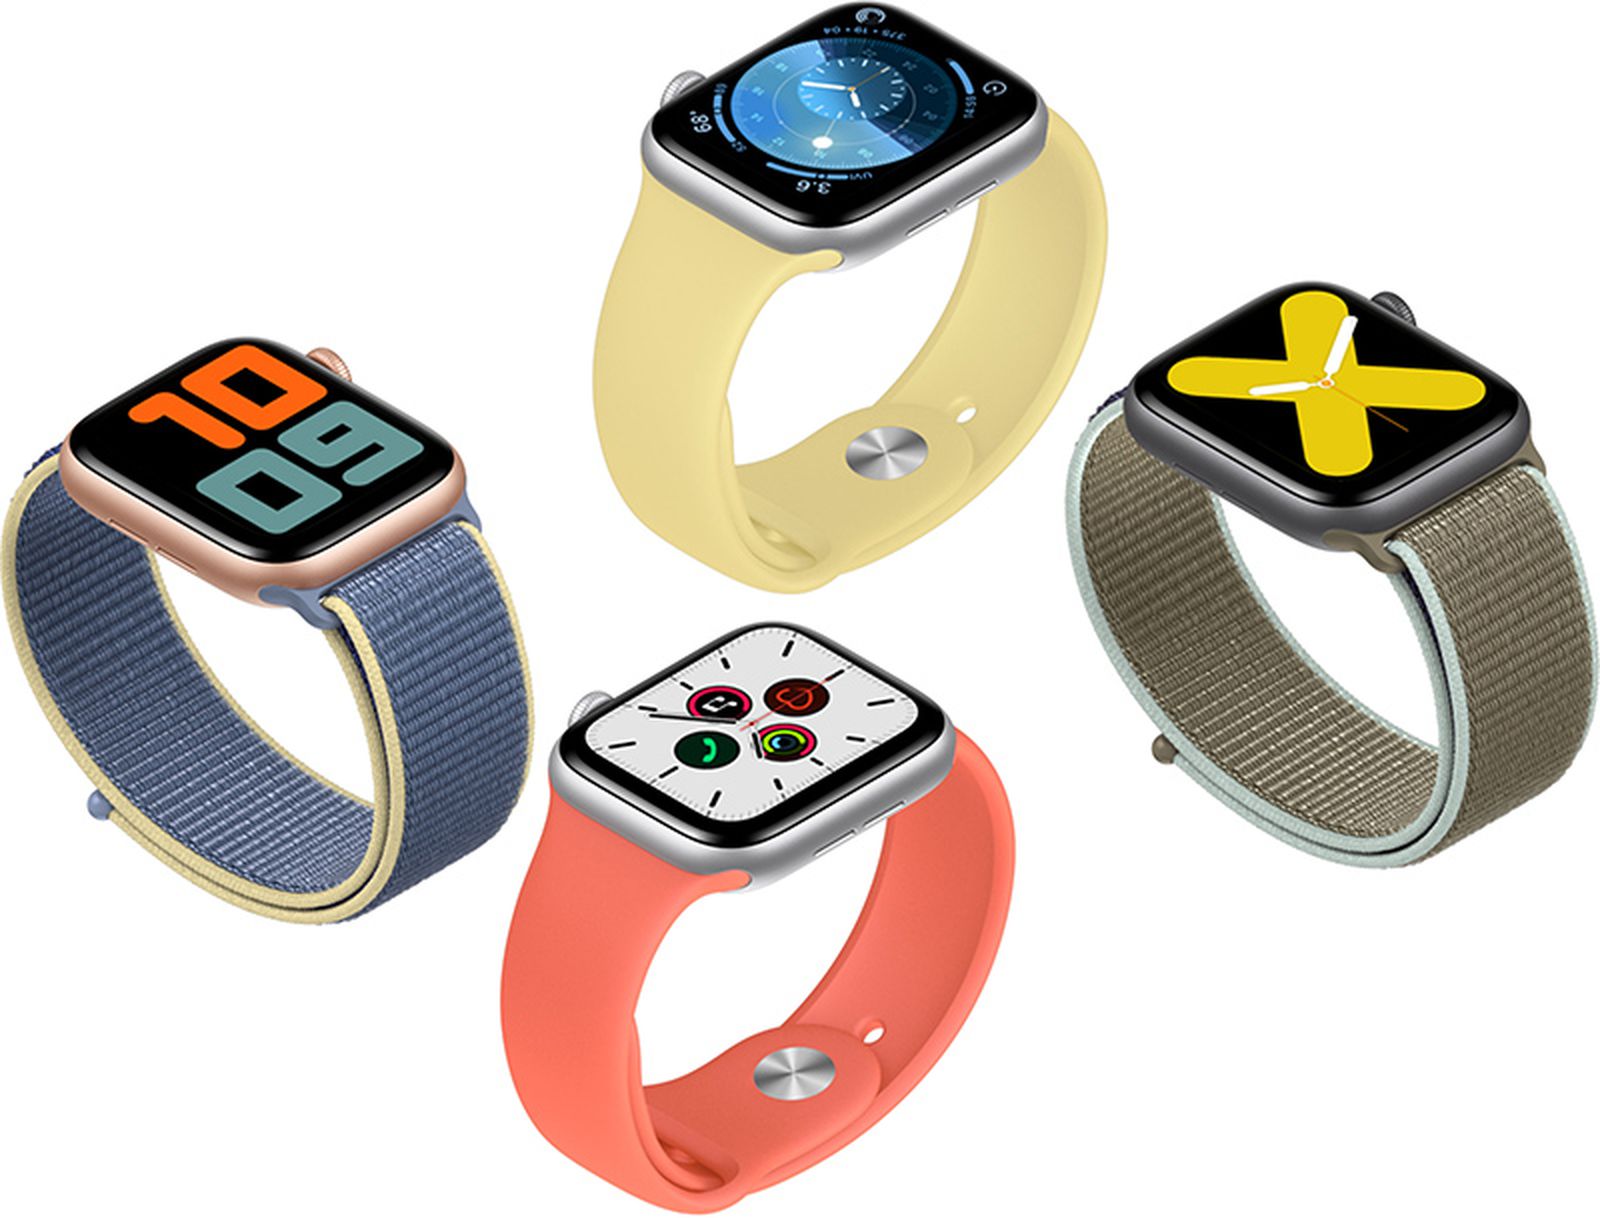 Apple Watch Series 6 Could Feature Touch Id Fingerprint Sensor